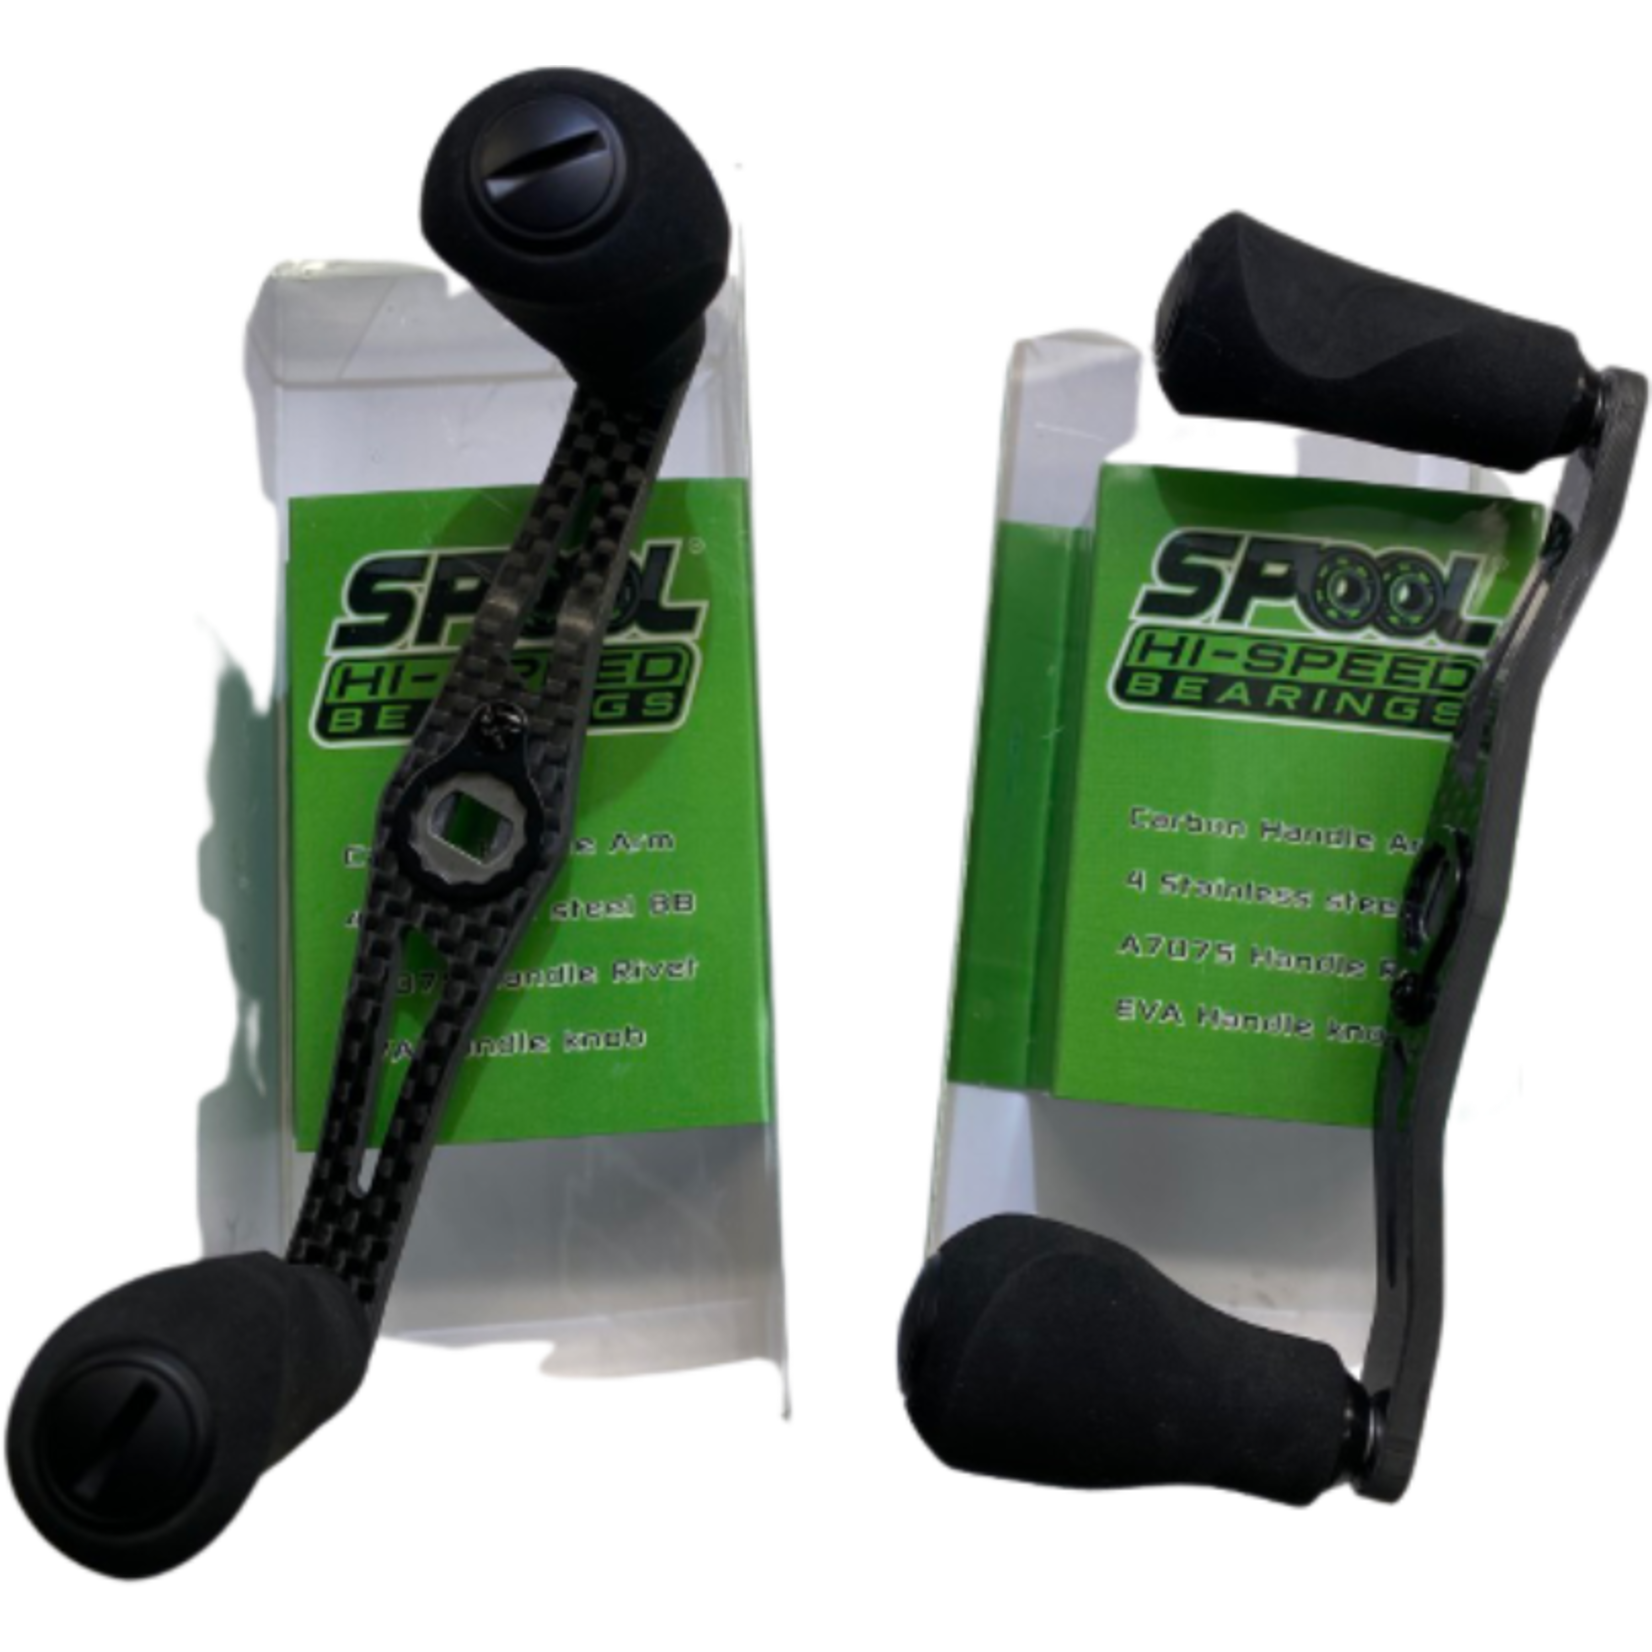 Spool Spool Hi-Speed Bearings Carbon Fiber Reel Handle